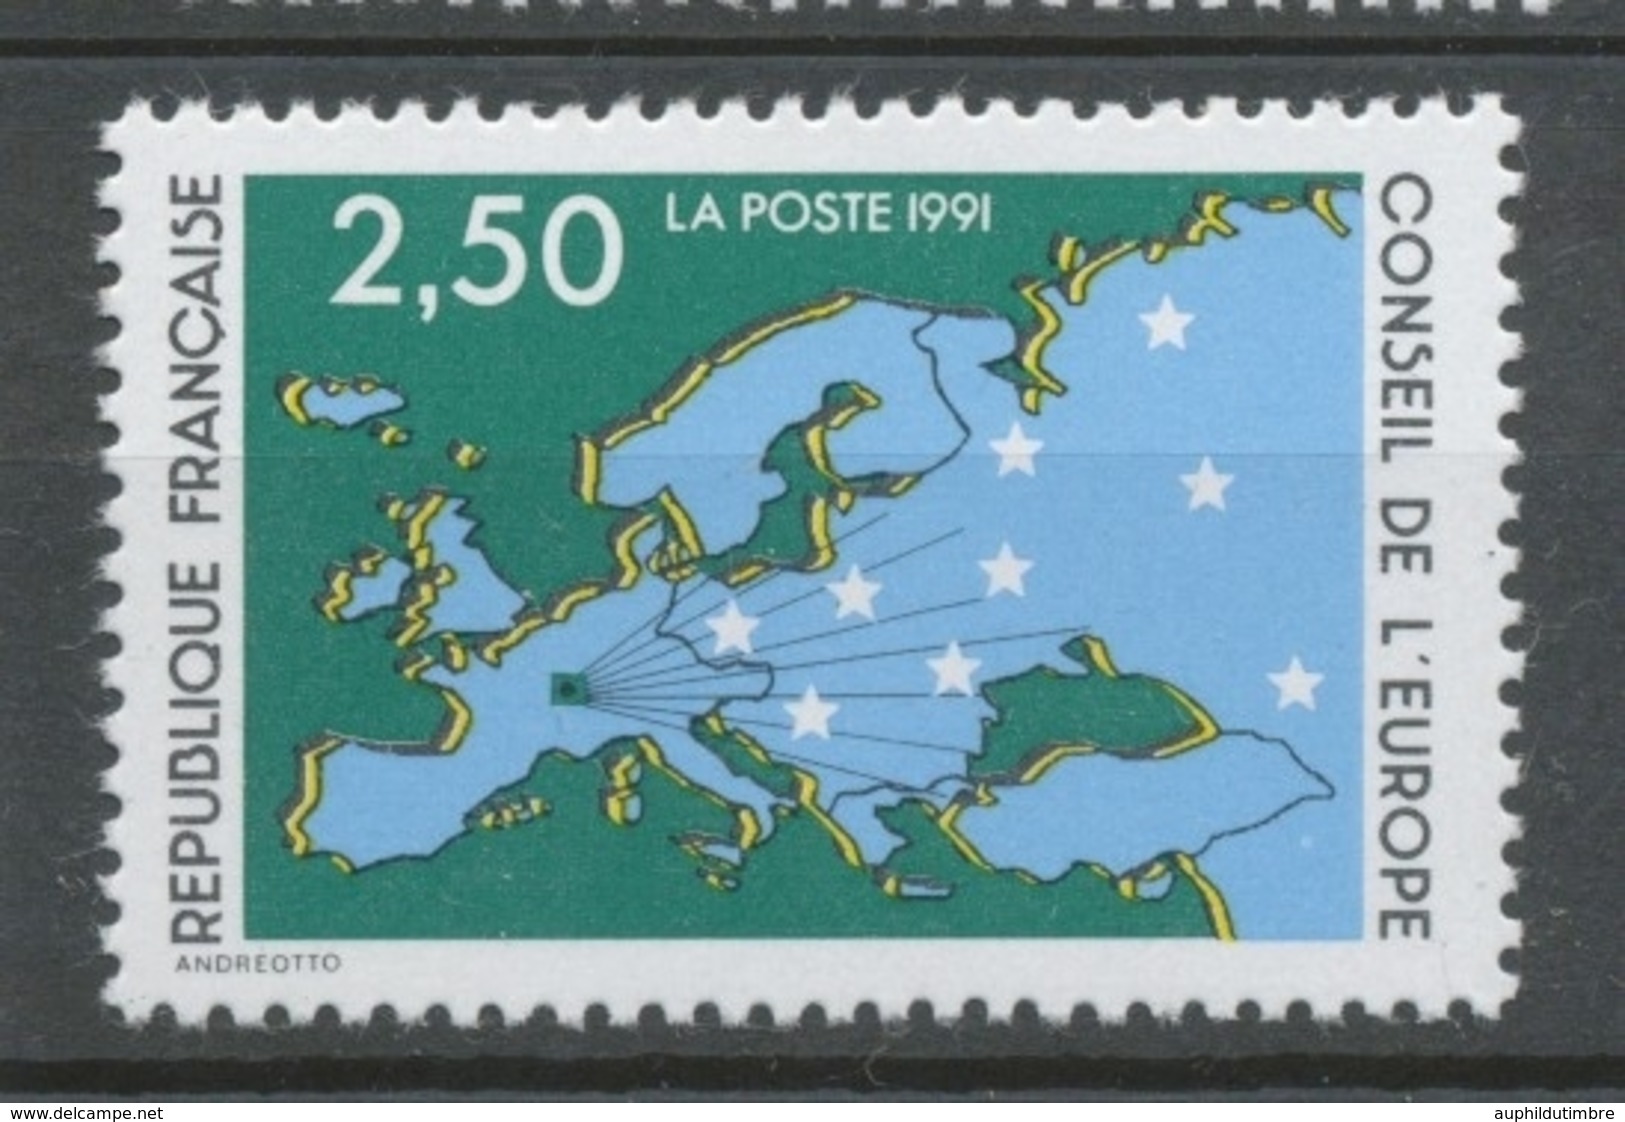 Service N°106 Conseil De L' Europe. 2f.50  Multicolore ZS106 - Mint/Hinged